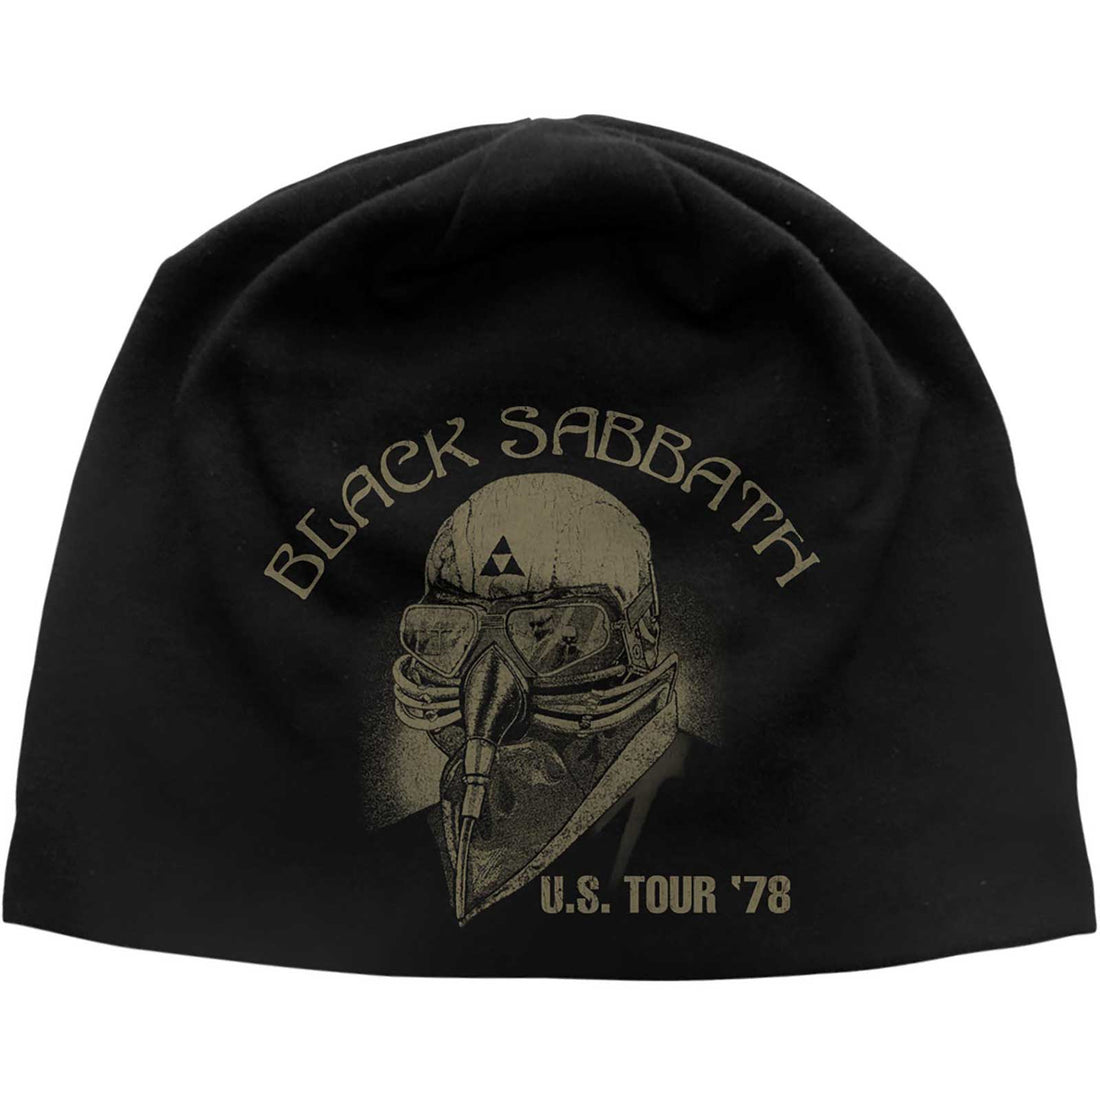 Black Sabbath Unisex Beanie Hat: Us Tour '78 JD Print'